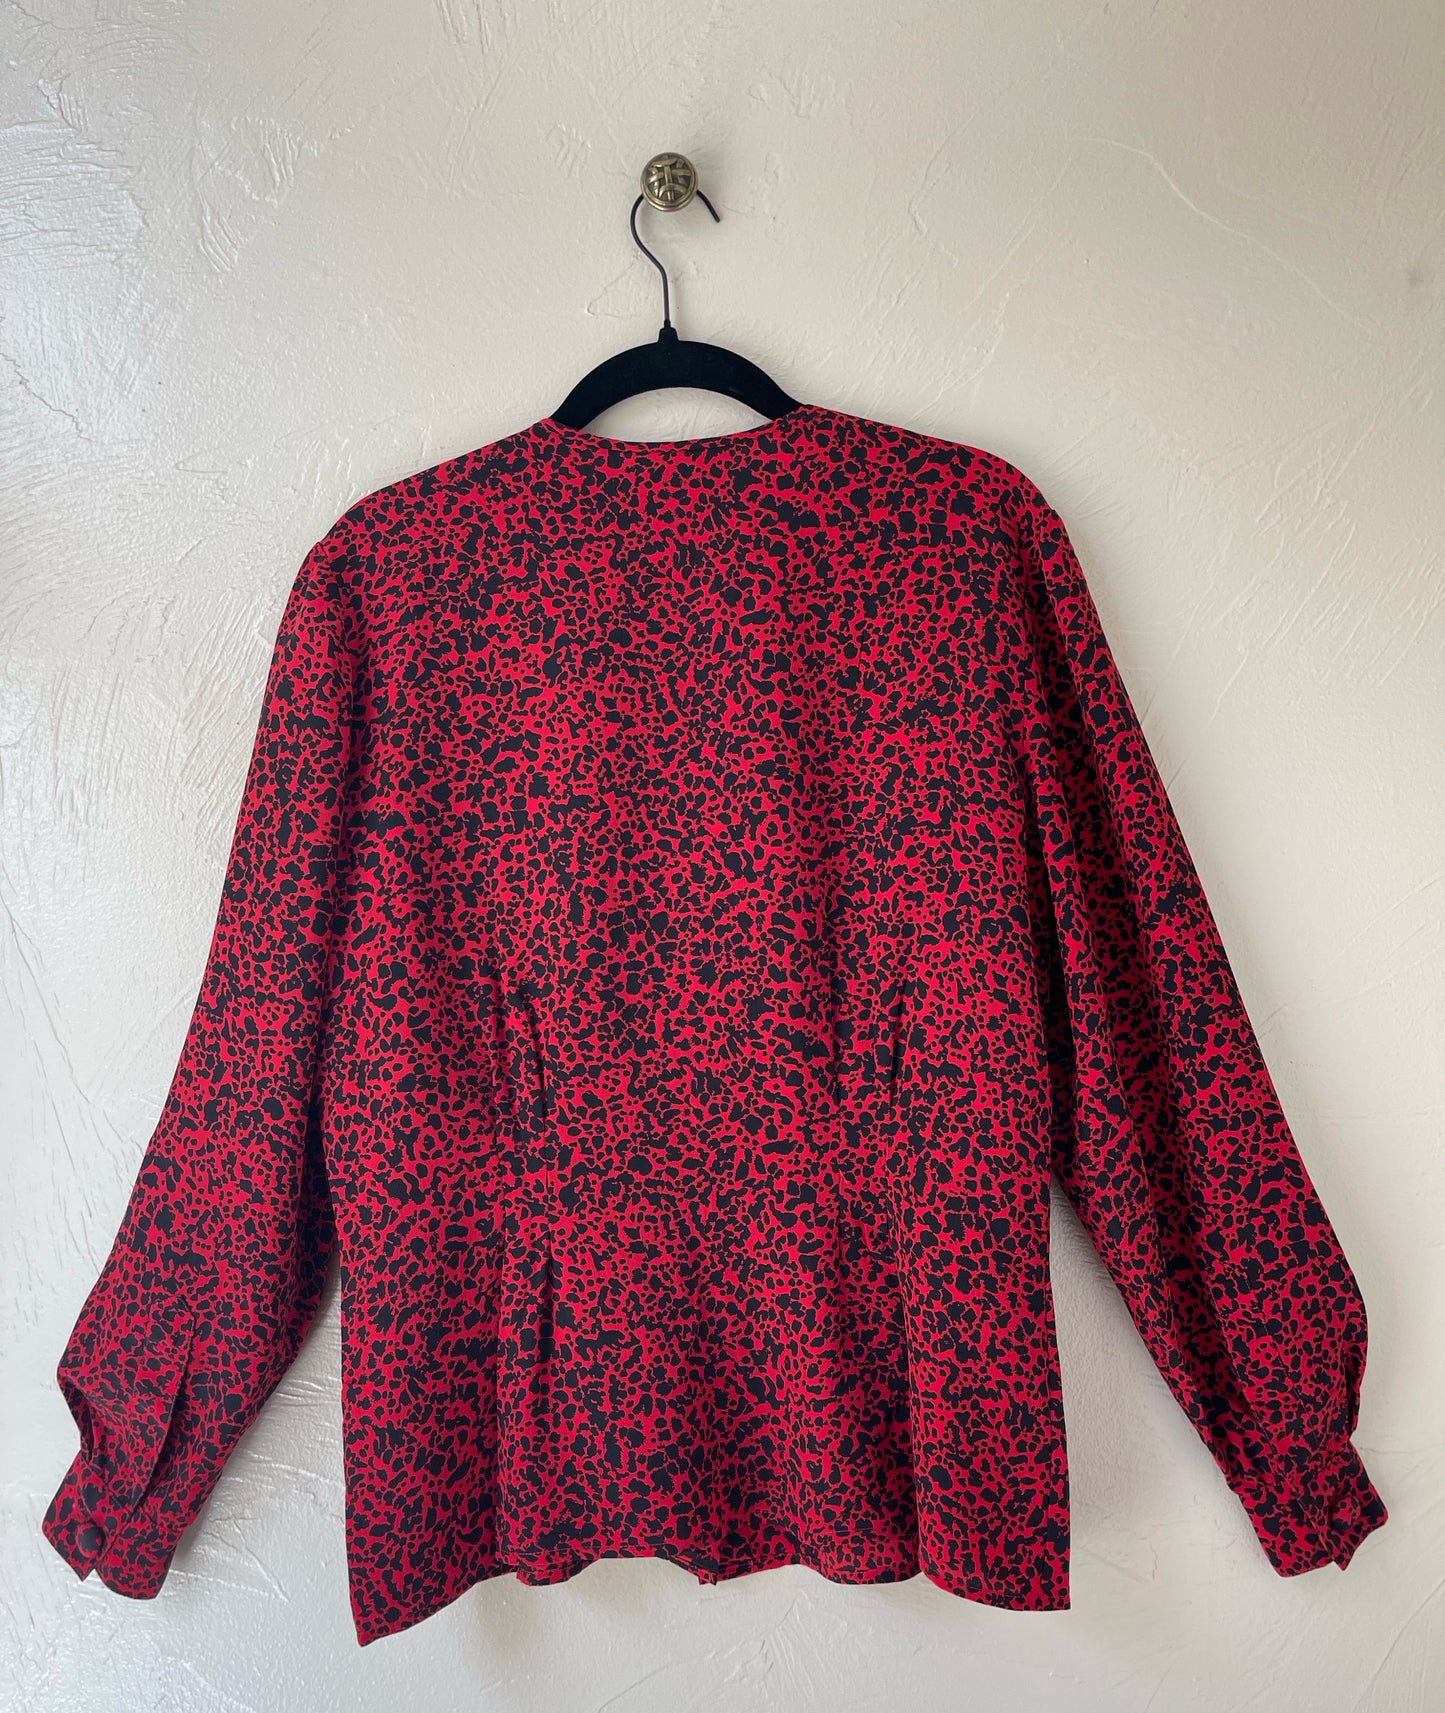 Blusa 100% seda con estampado de leopardo rojo